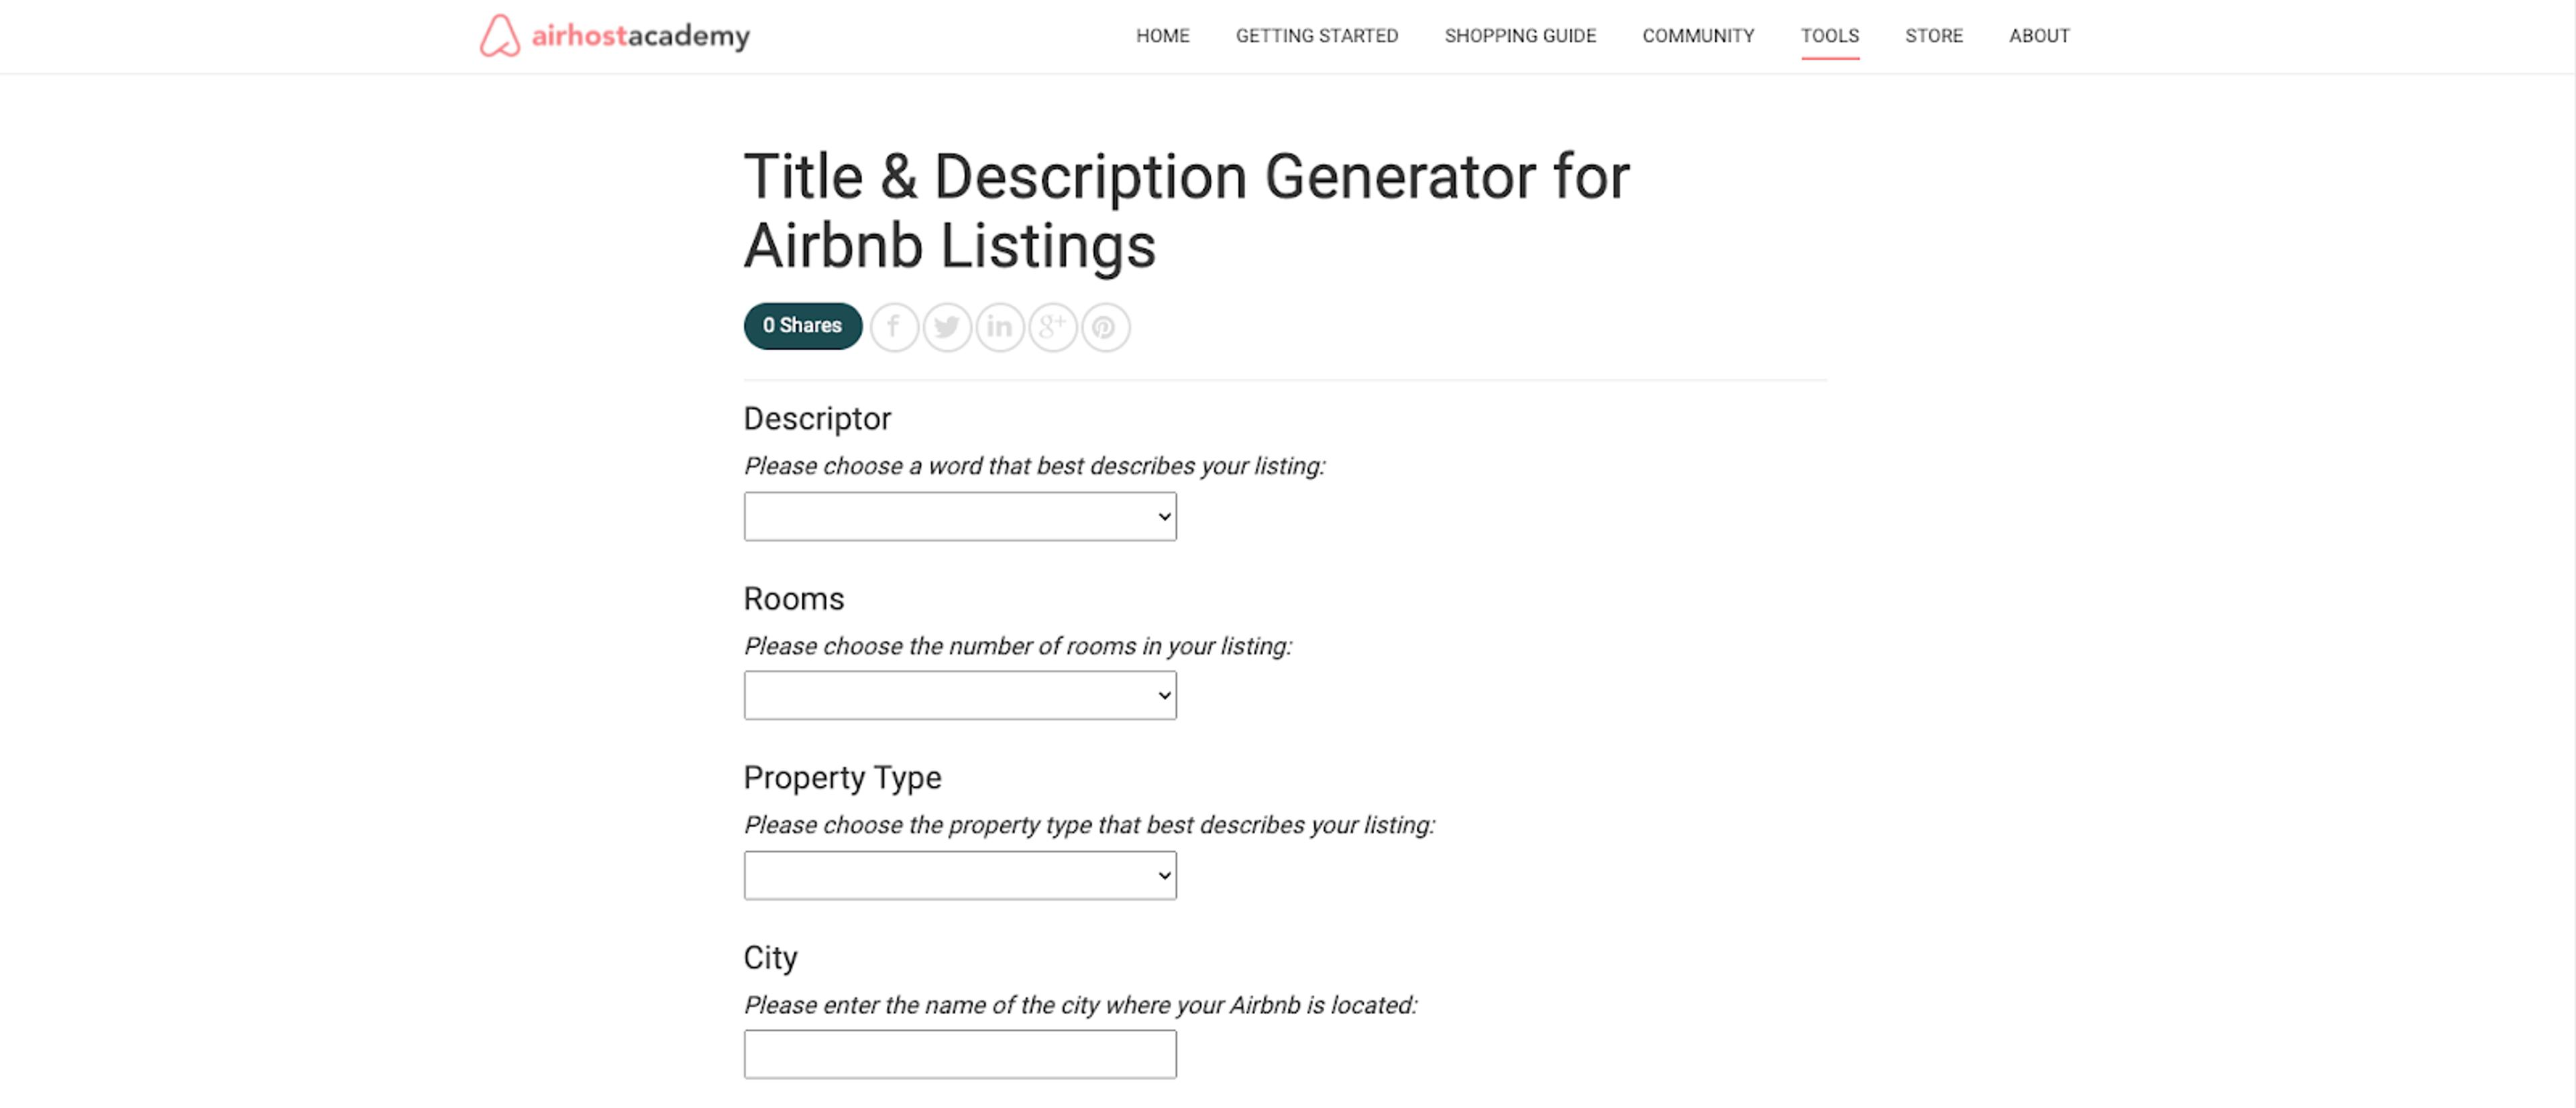 Airbnb Description Generator